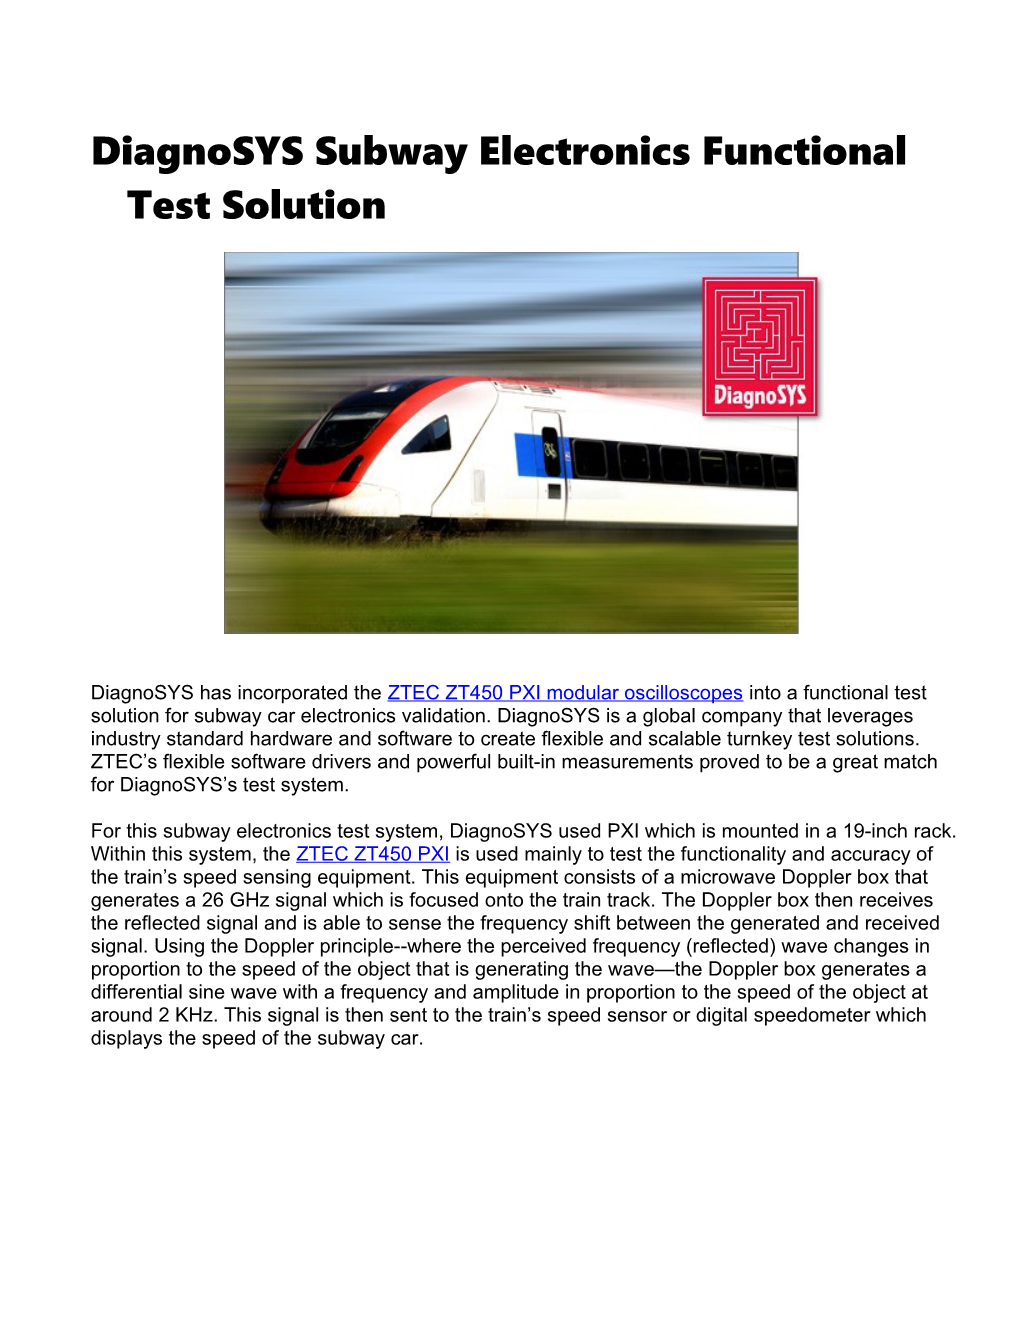 Diagnosys Subway Electronics Functional Test Solution